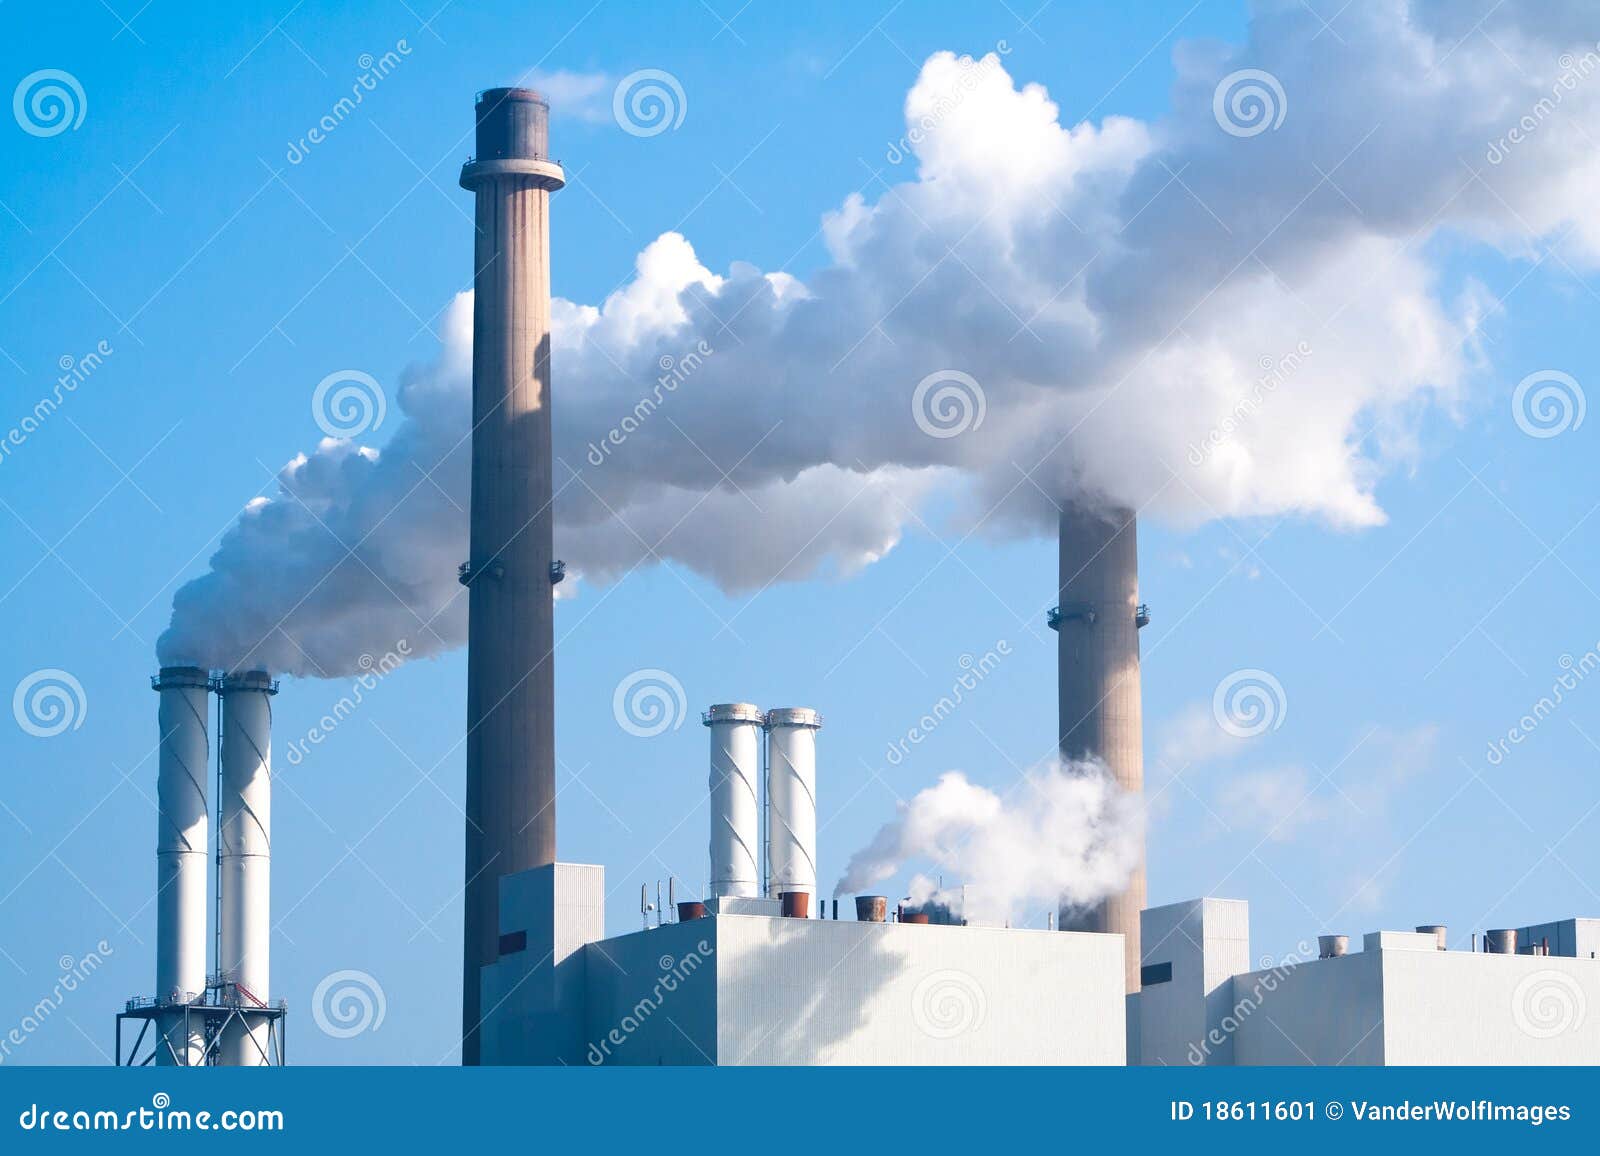 pipe factory smoke emission